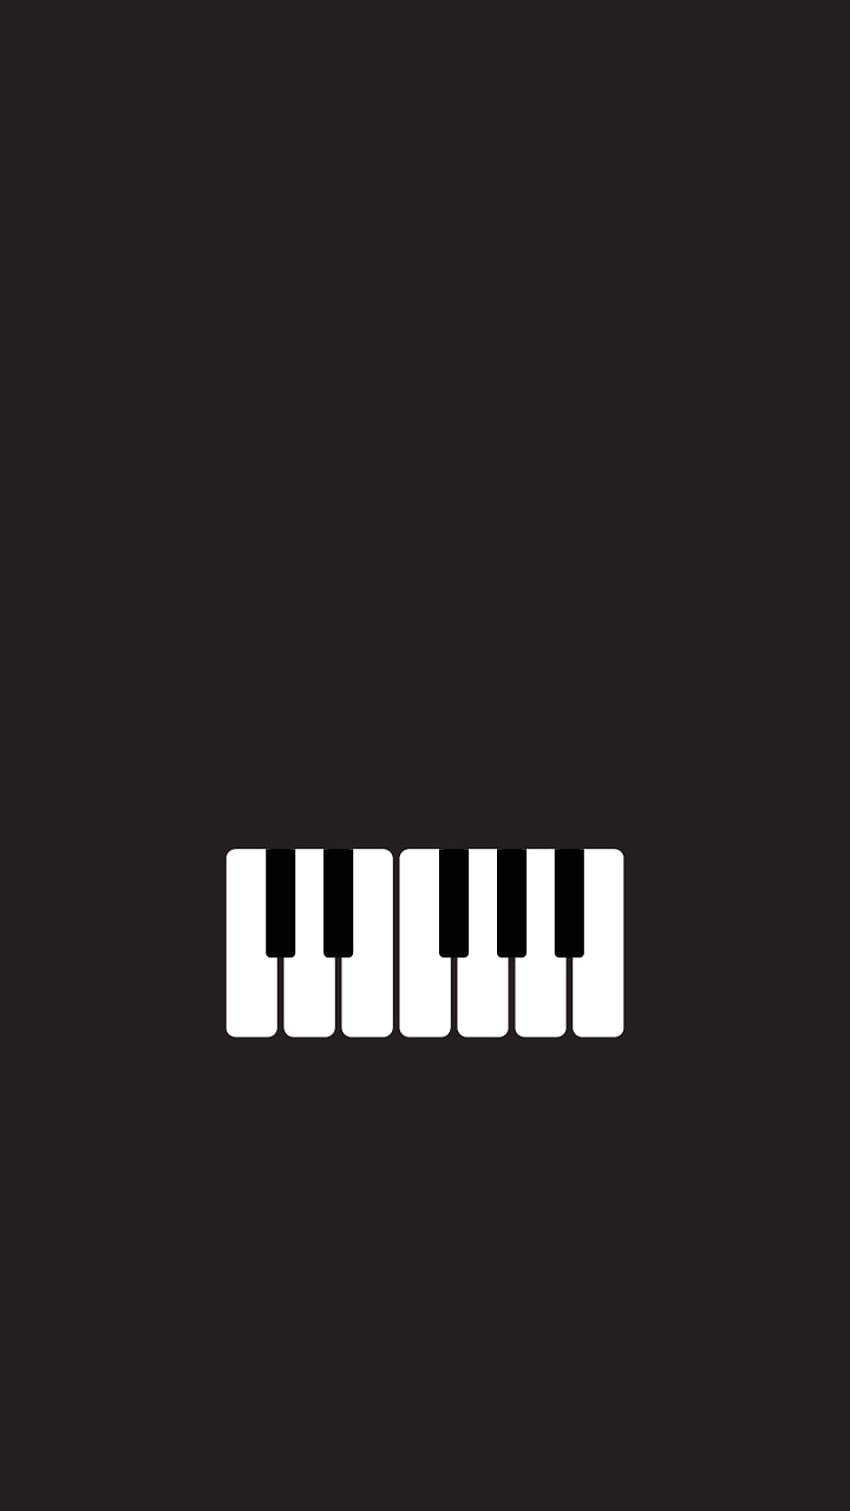 Piano, keyboard, amoled, minimal, musik, putih, hitam, 2022, instrumen, sederhana wallpaper ponsel HD